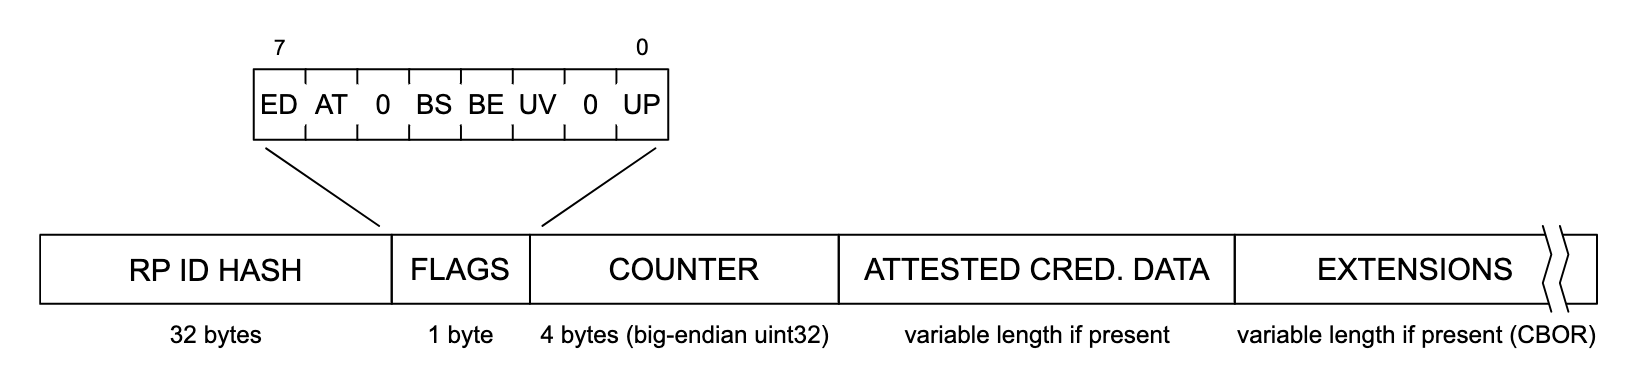 Representación de la estructura de datos de autenticación. De izquierda a derecha, cada sección de la estructura de datos dice &quot;RP ID HASH&quot; (32 bytes), &quot;FLAGS&quot; (1 byte), &quot;COUNTER&quot; (4 bytes, big-endian uint32), &quot;ATTESTE CRED. DATA&#39; (longitud variable si está presente) y &#39;EXTENSIONS&#39; (longitud variable si está presente [CBOR]). La sección &quot;FLAGS&quot; se expande para mostrar una lista de posibles marcas, etiquetadas de izquierda a derecha: &quot;ED&quot;, &quot;AT&quot;, &quot;0&quot;, &quot;BS&quot;, &quot;BE&quot;, &quot;UV&quot;, &quot;0&quot; y &quot;UP&quot;).